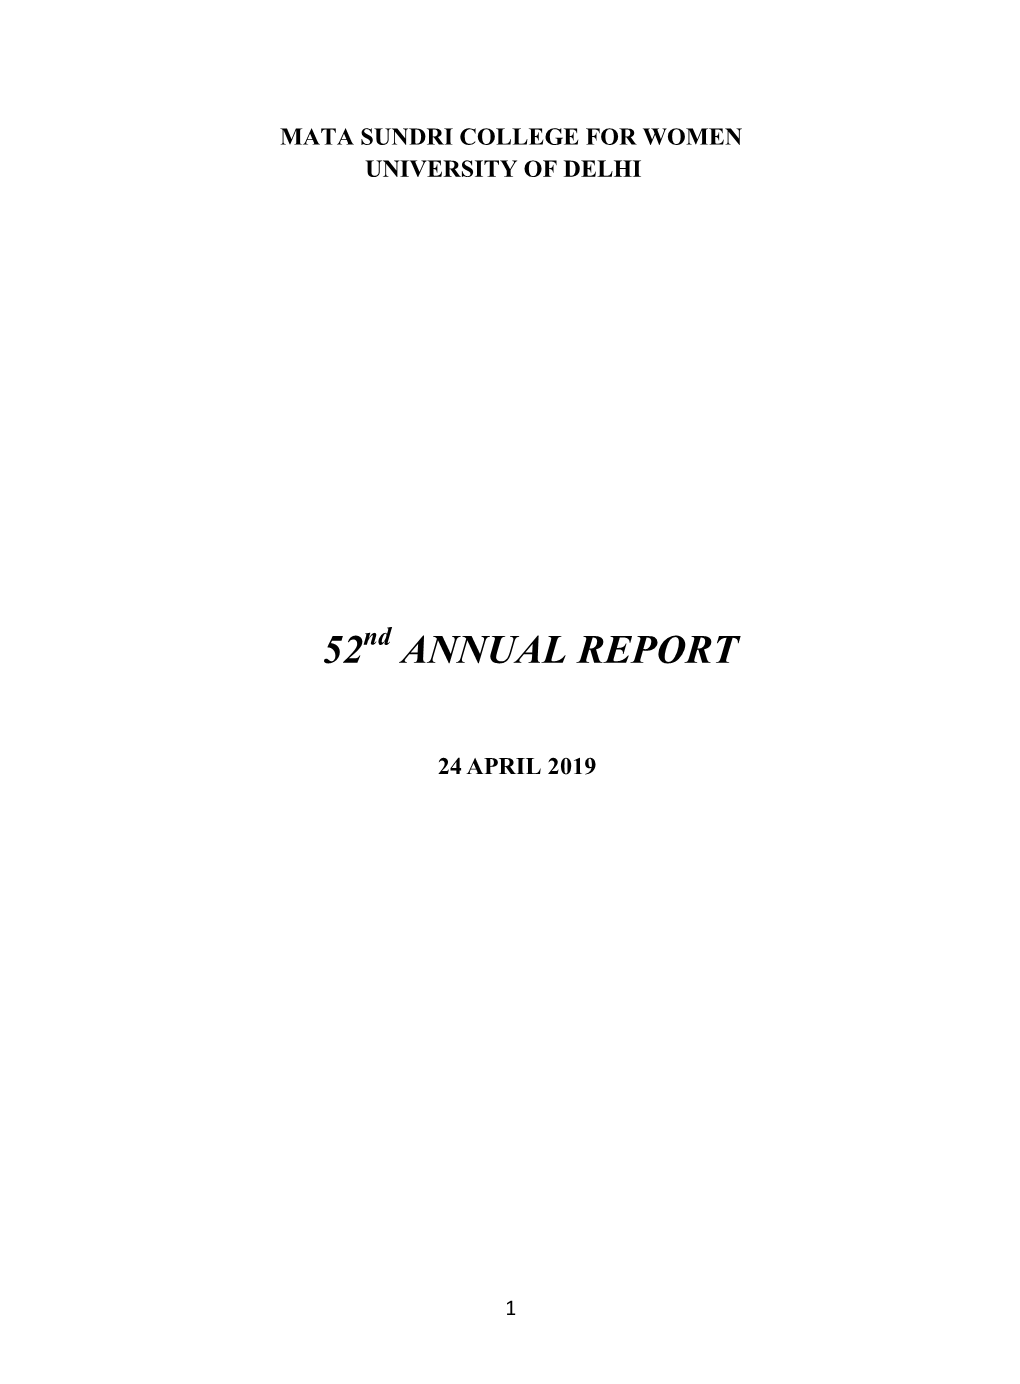 52 Annual Report